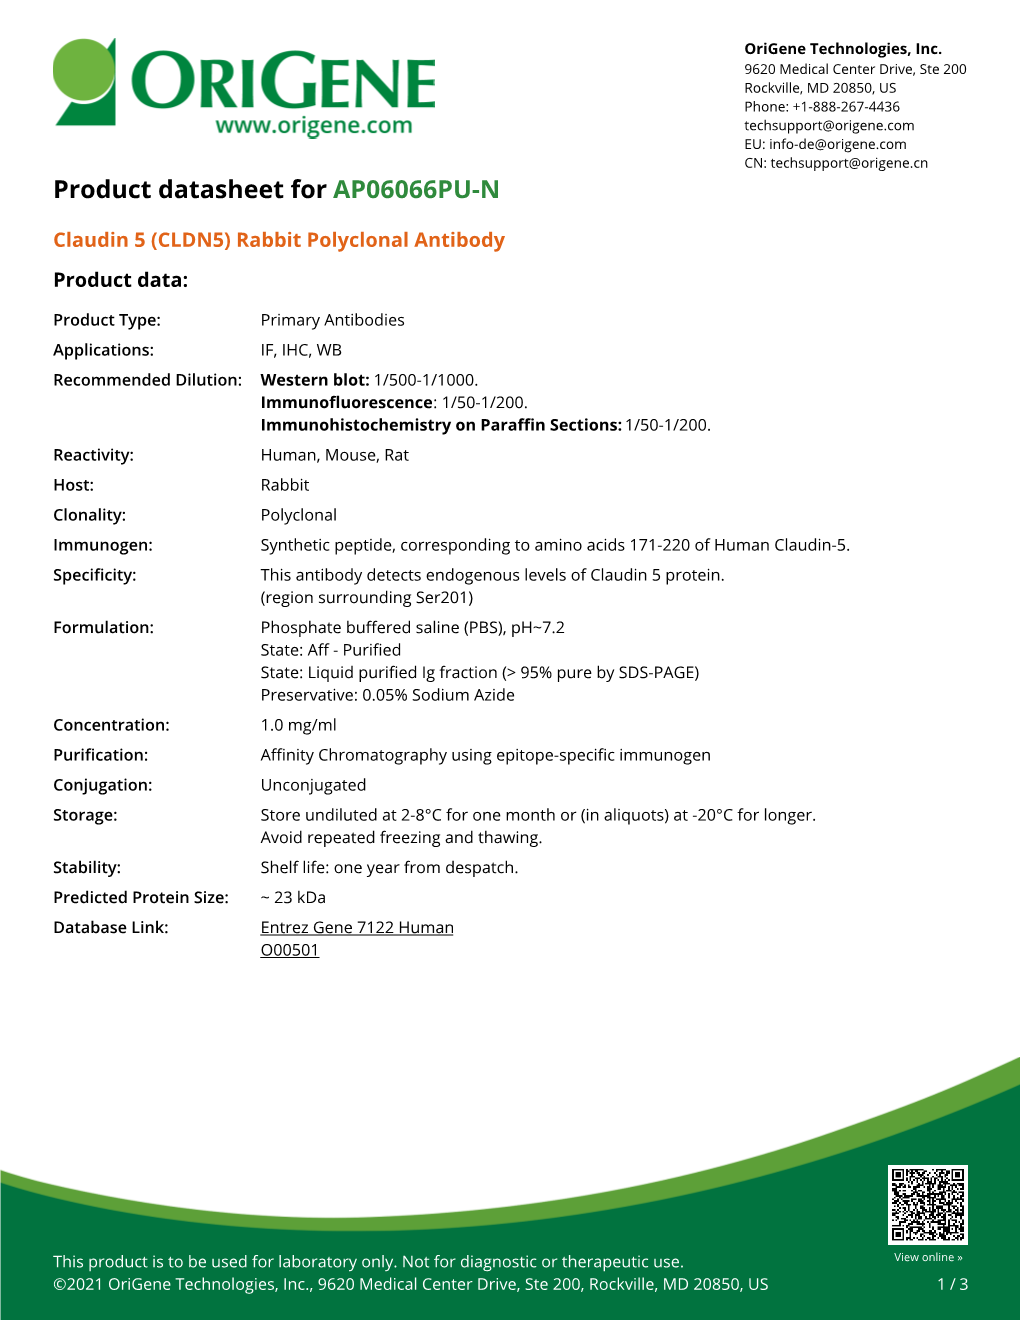 Claudin 5 (CLDN5) Rabbit Polyclonal Antibody – AP06066PU-N | Origene